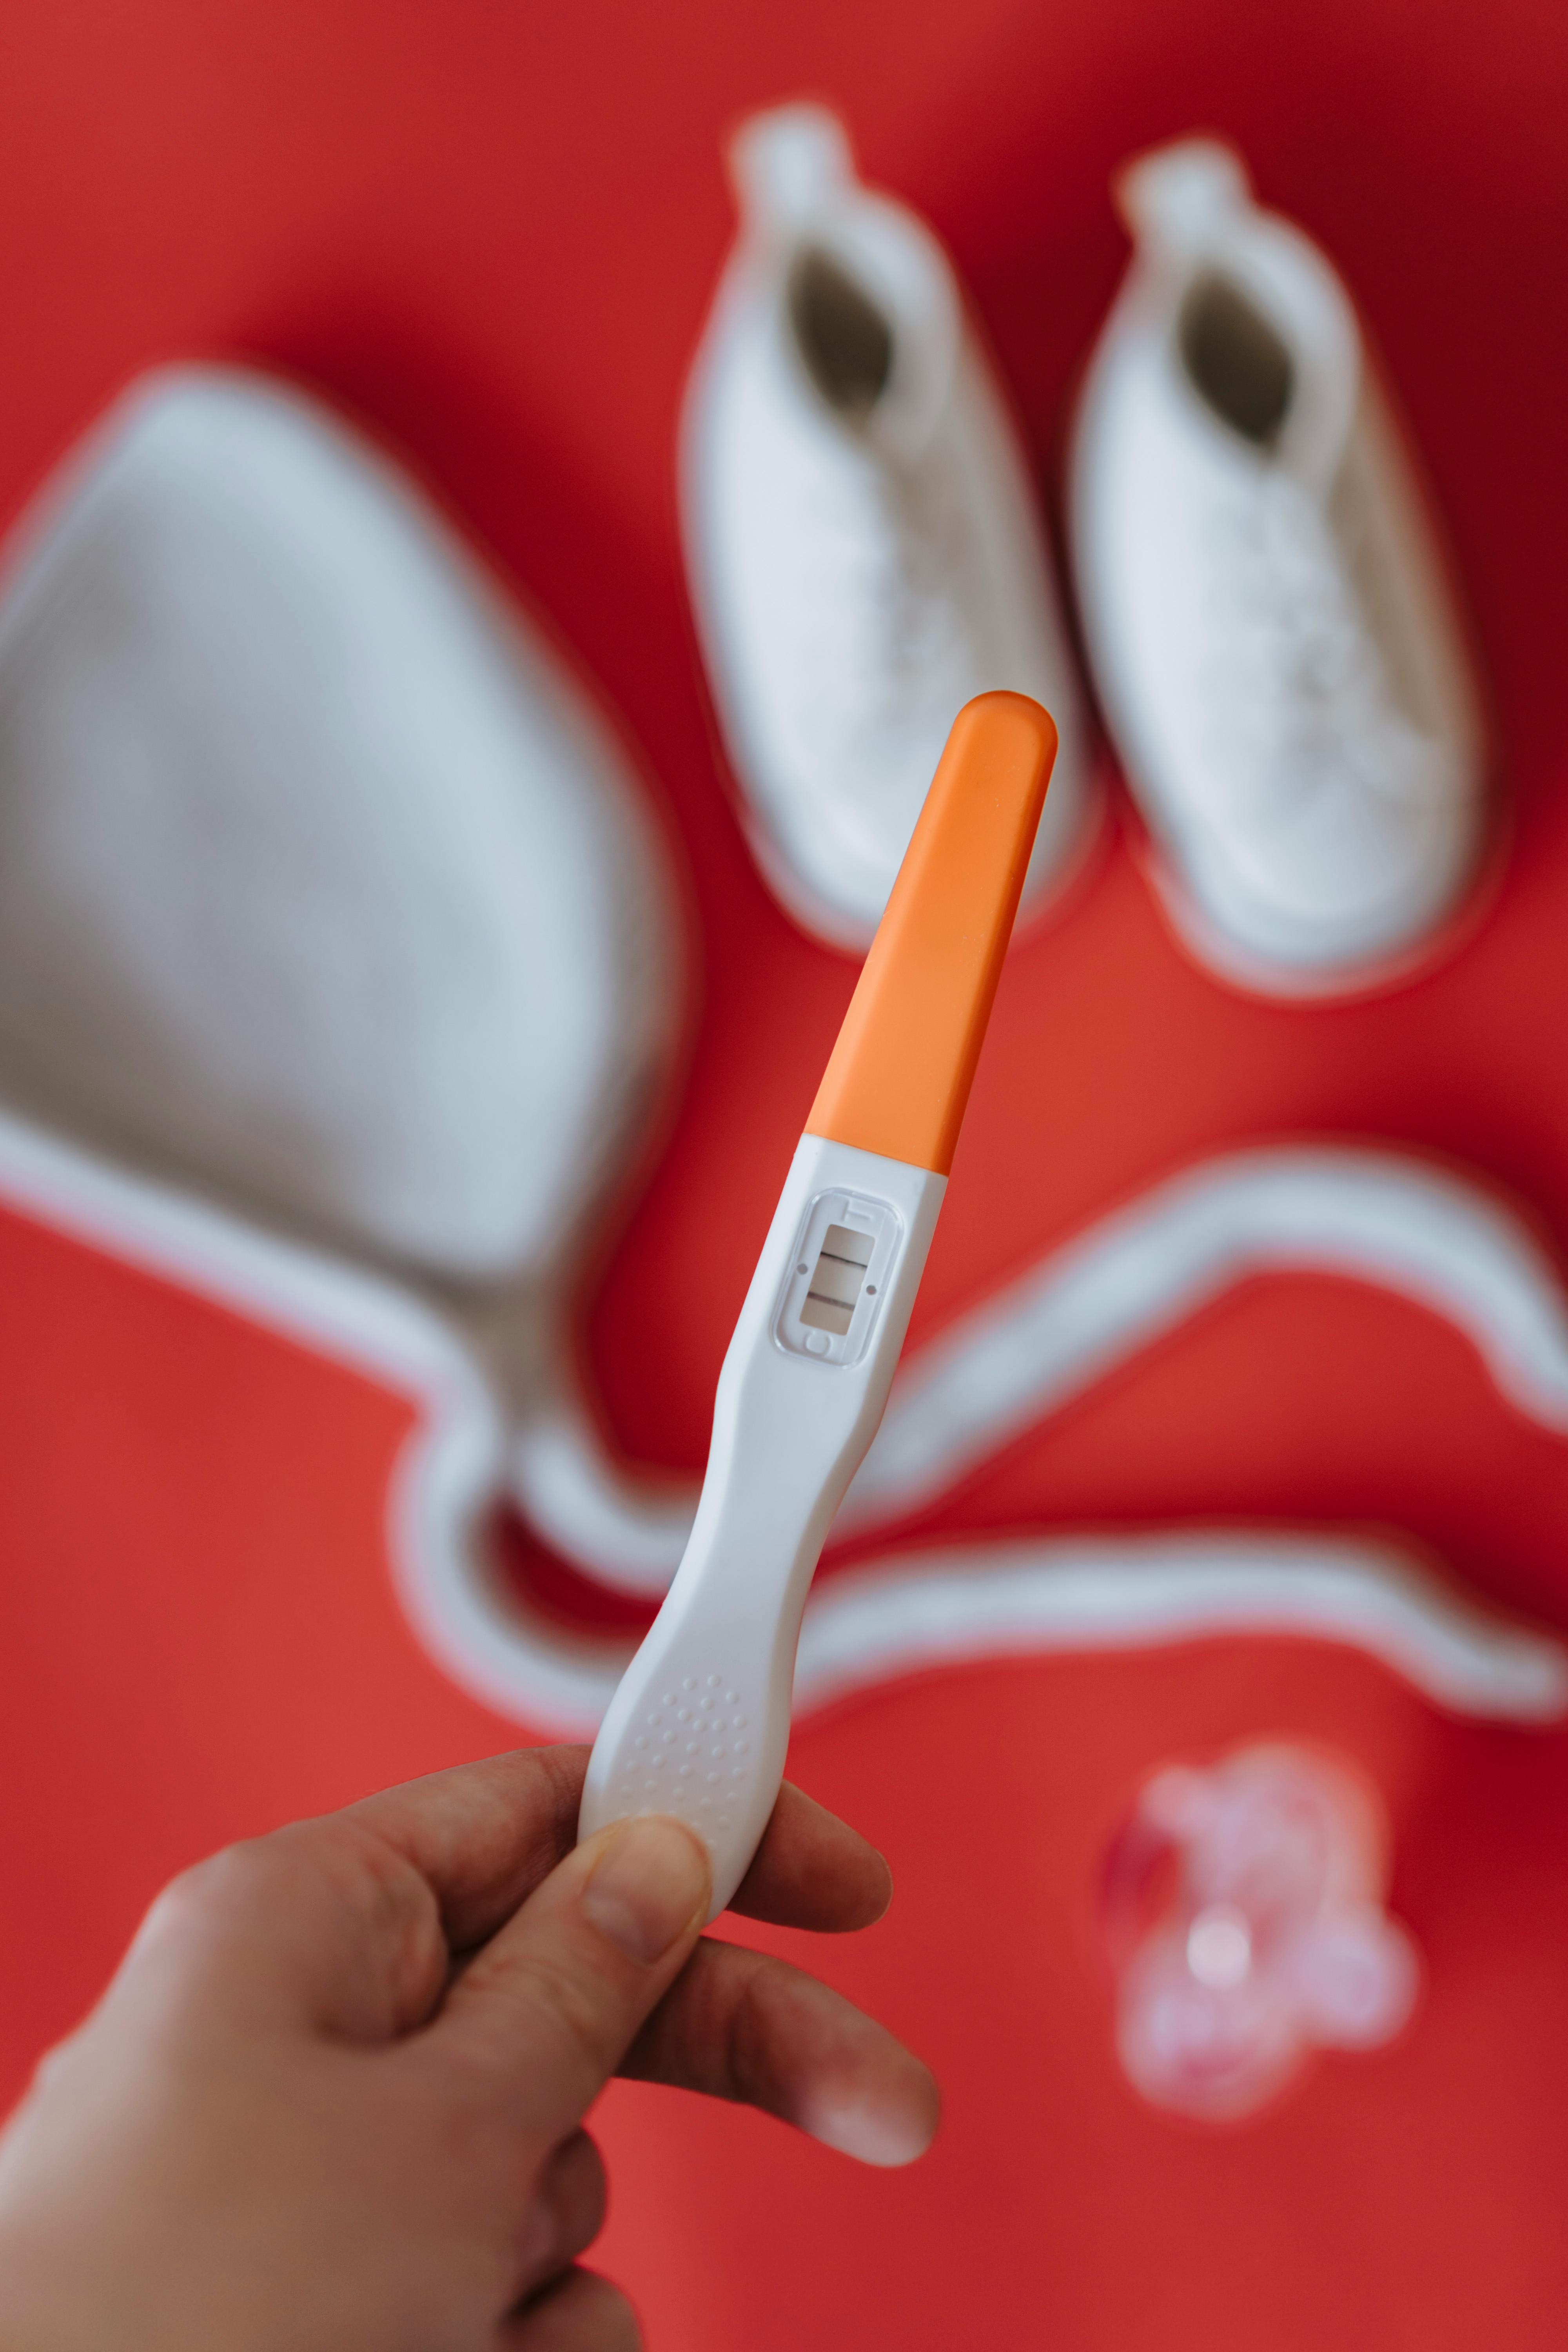 A pregnancy test showing a positive result | Source: Flickr